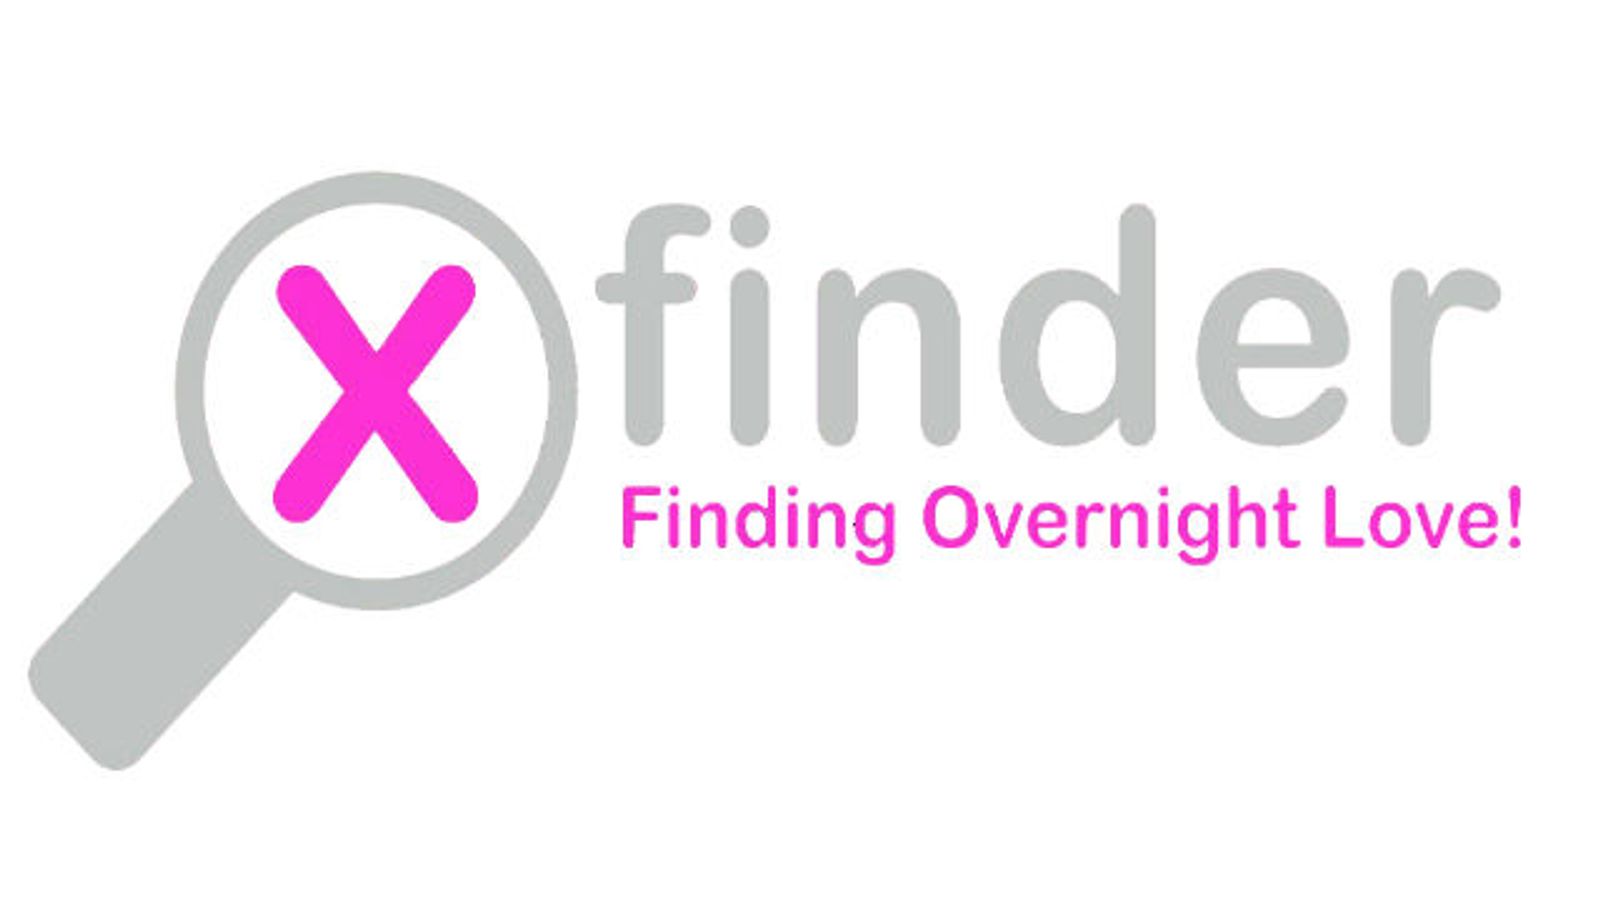 Xfinder Provides Global Sex Service Listings